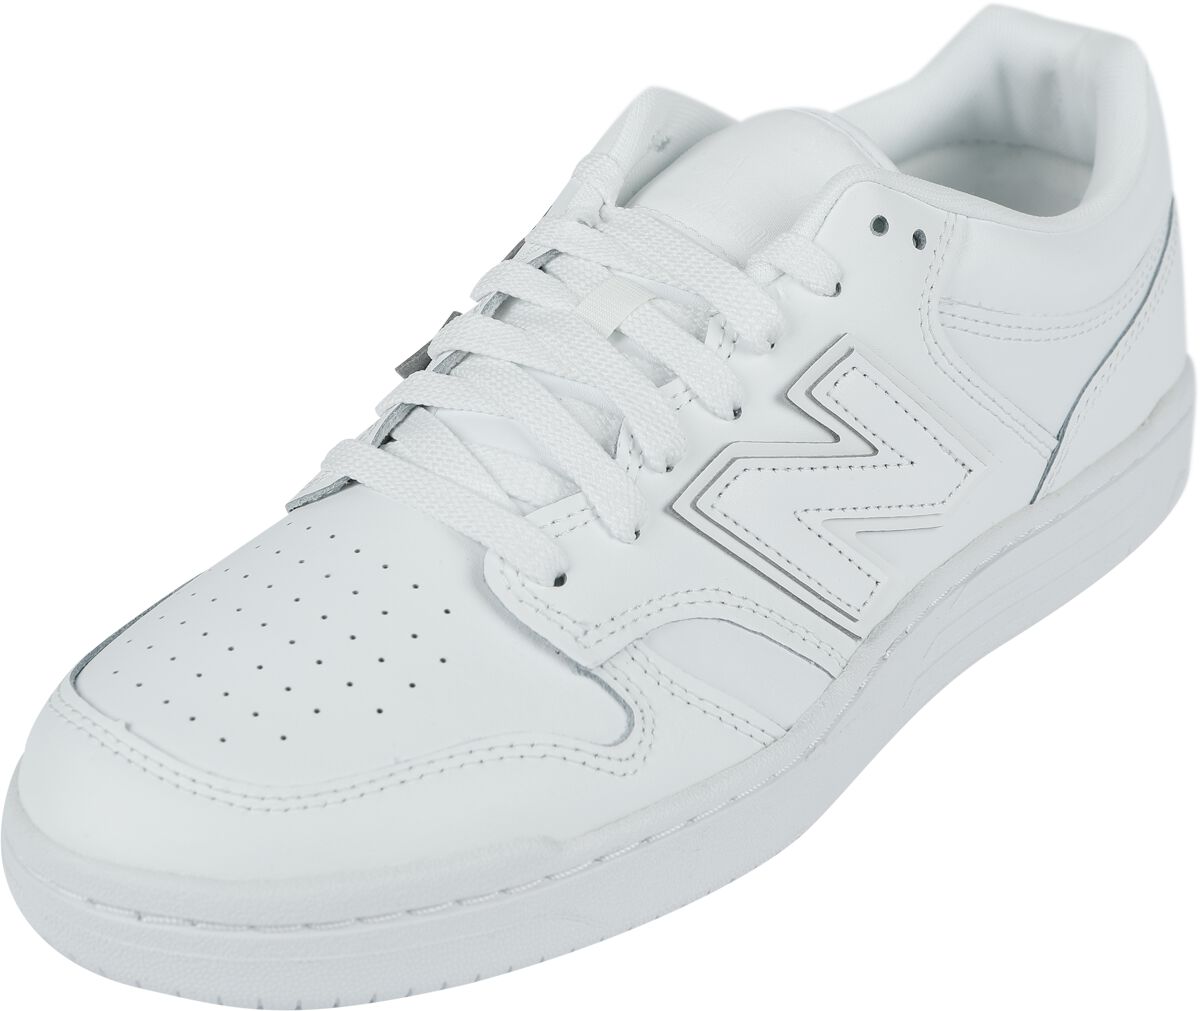 New Balance Sneaker - 480L - EU41 bis 5 - für Männer - Größe EU43 - weiß